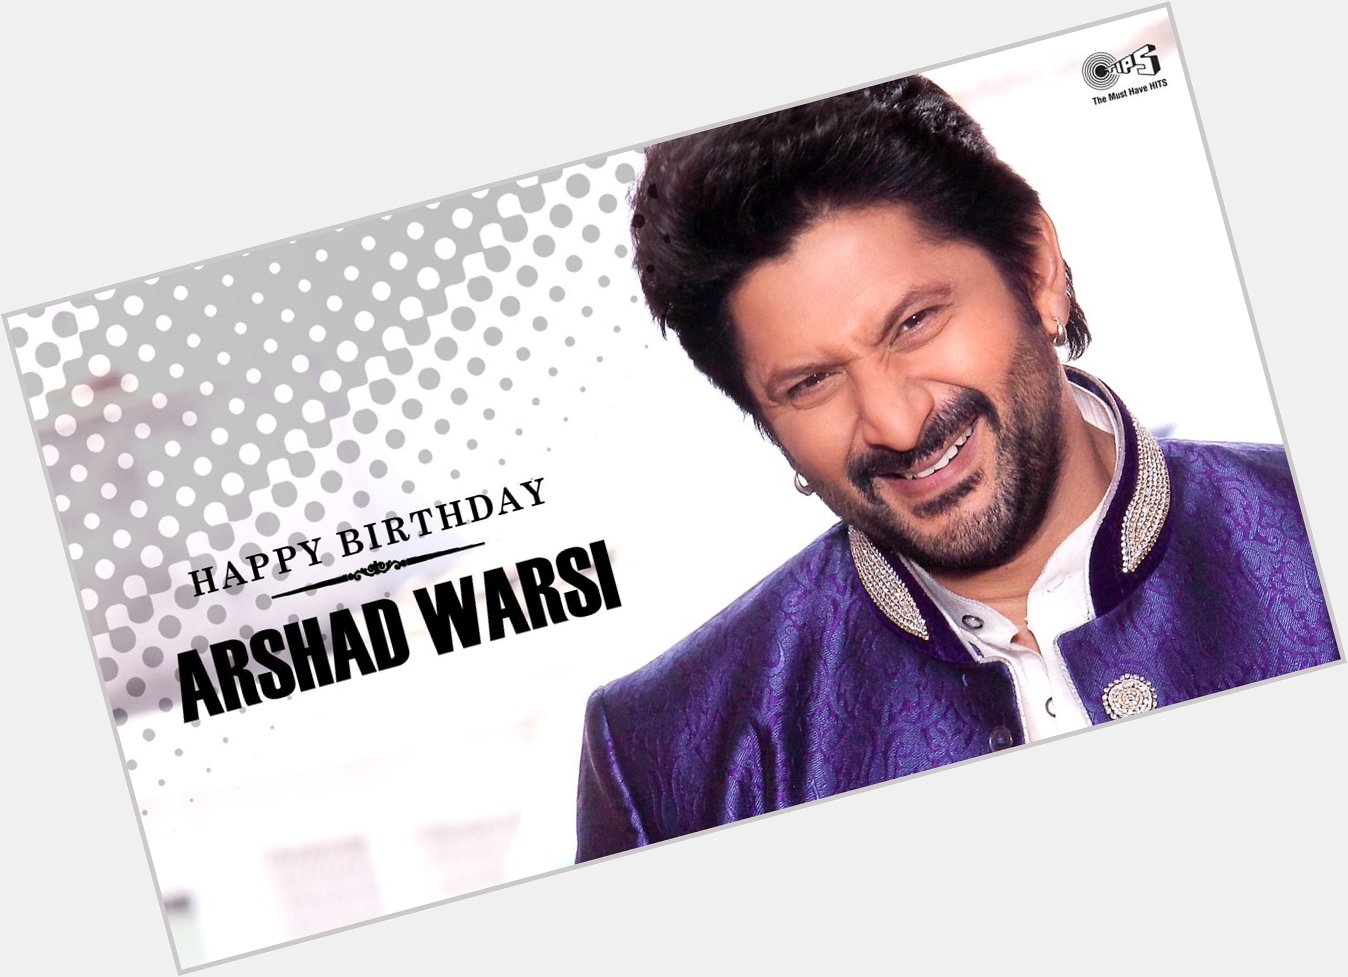 Happy birthday Arshad warsi bhai 